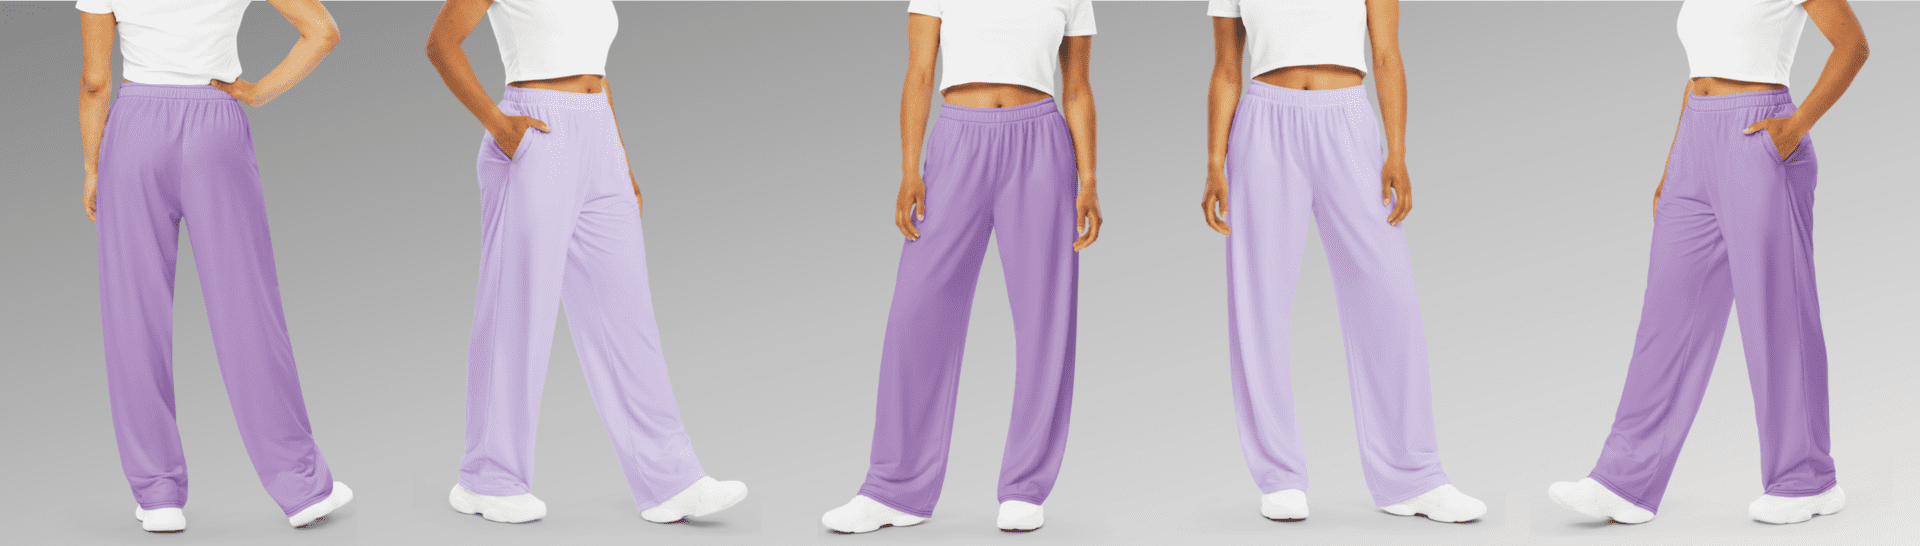 Five models wearing lavender pants.